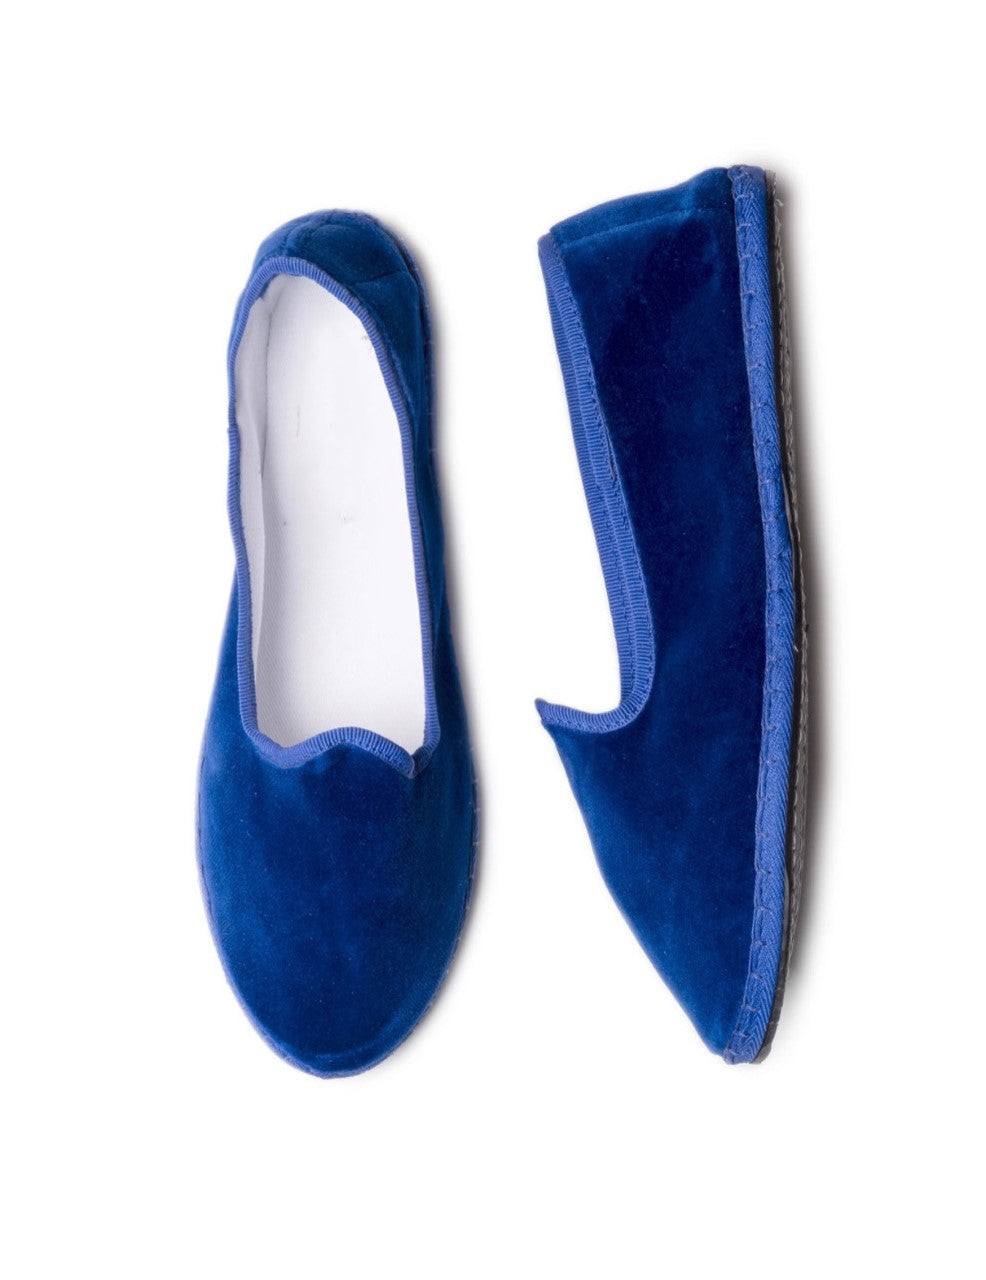 Royal blue Veneziane velvet shoes